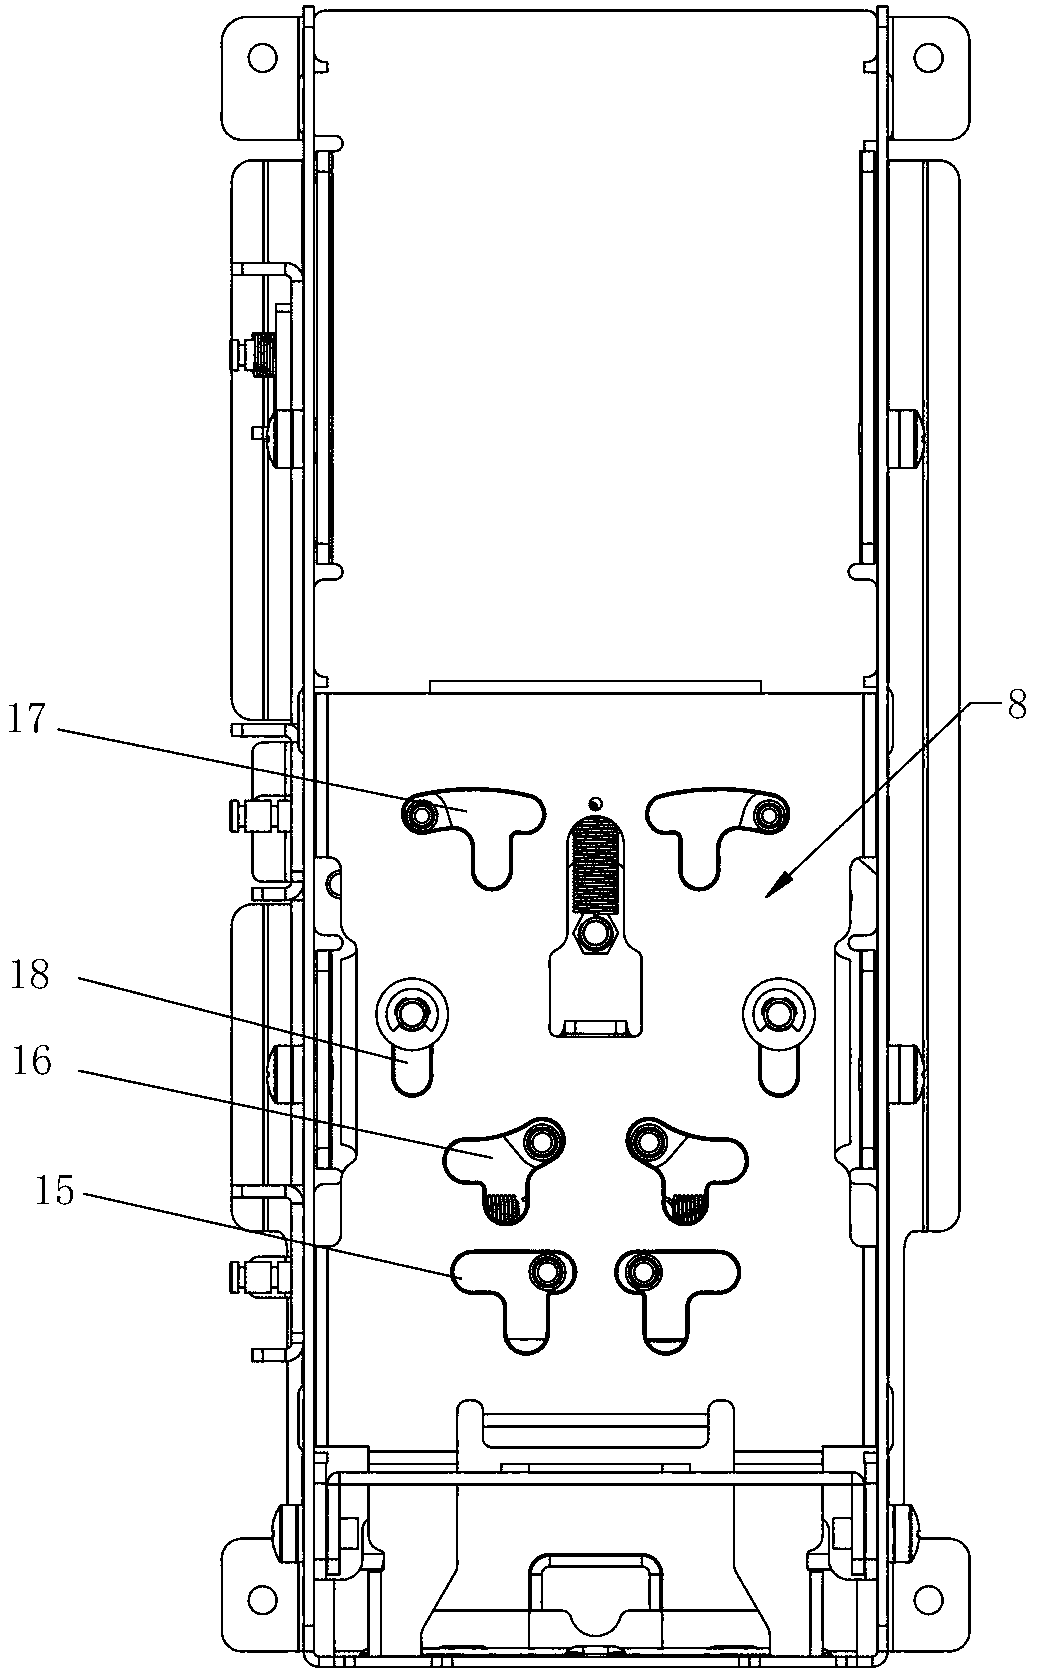 Control mechanism of card box gate